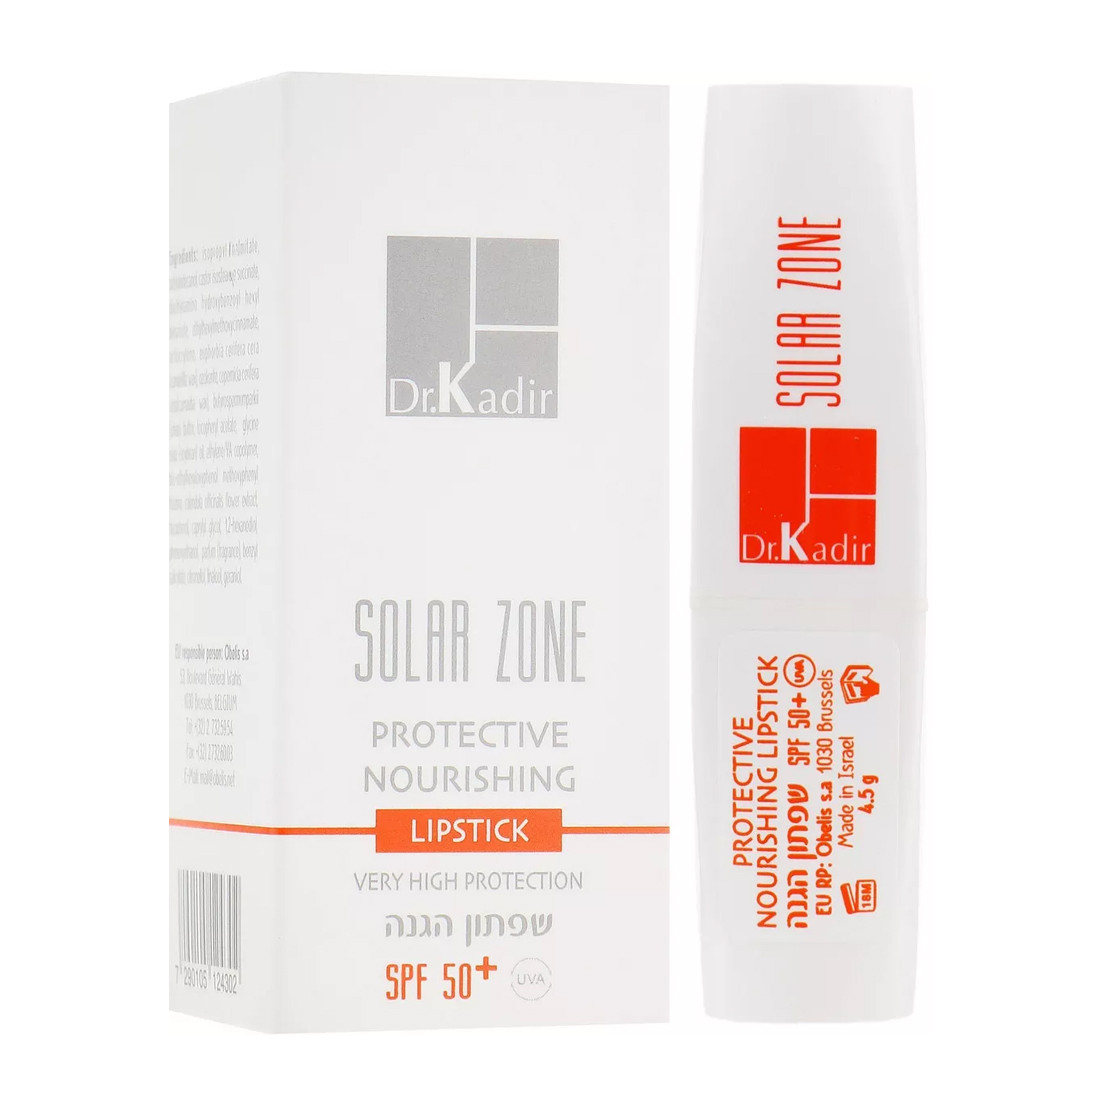 Dr. Kadir Solar Zone Protective Nourishing Lipstick SPF 50+ - Сонцезахисна зволожуюча помада SPF 50+